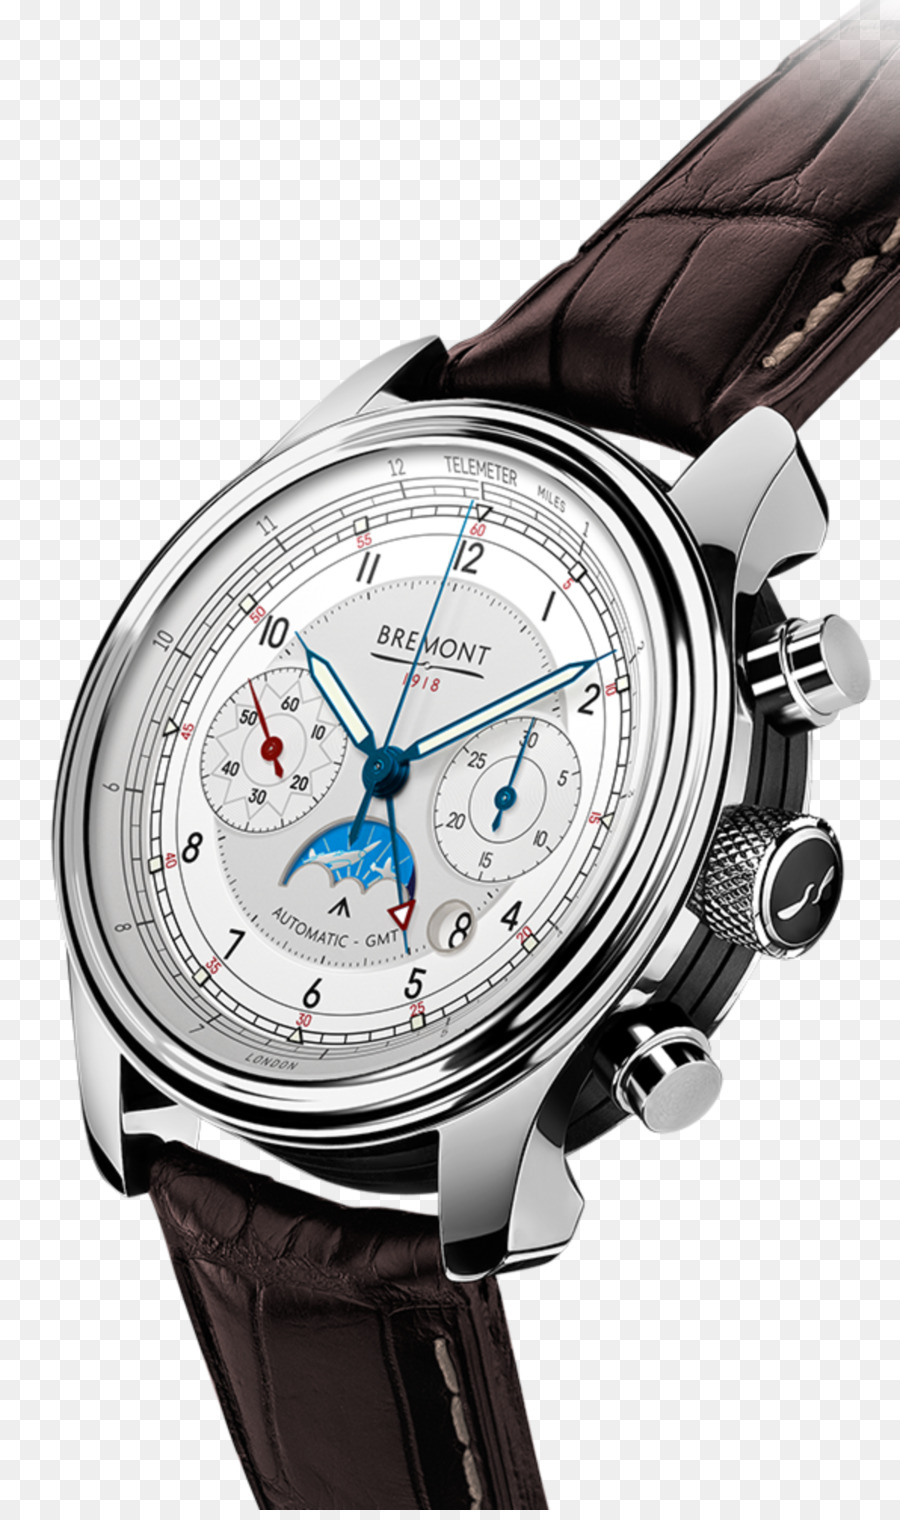 Bremont Watch Company Chronograph Baselworld Chronometer Uhr - Uhr